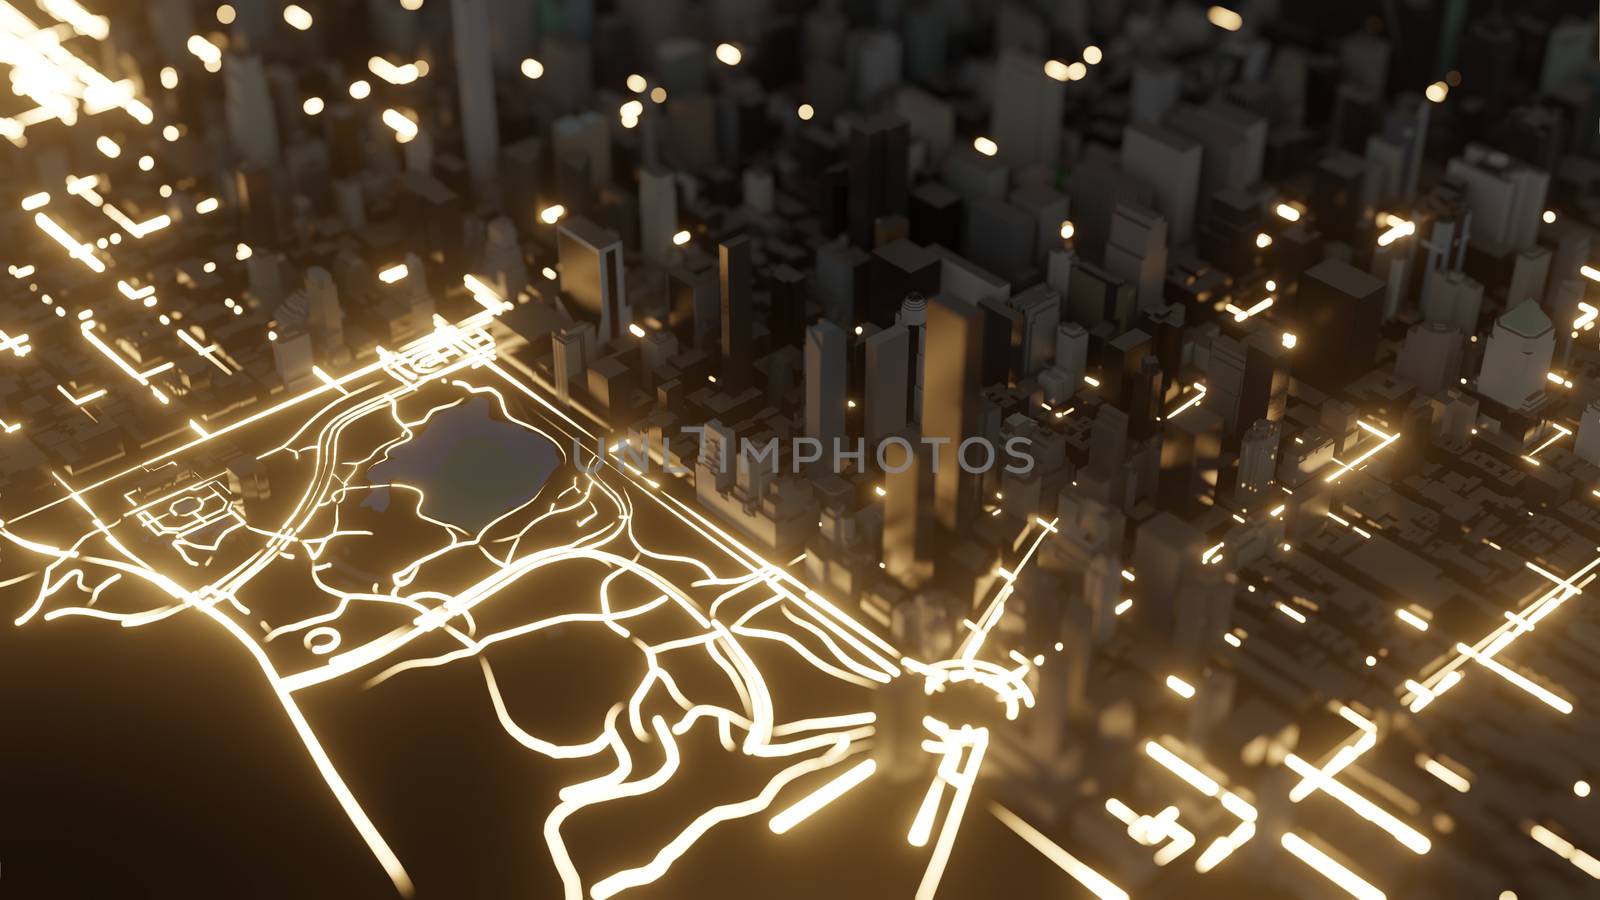 Modern city traffic road at night. Cyberpunk style 3D illustration